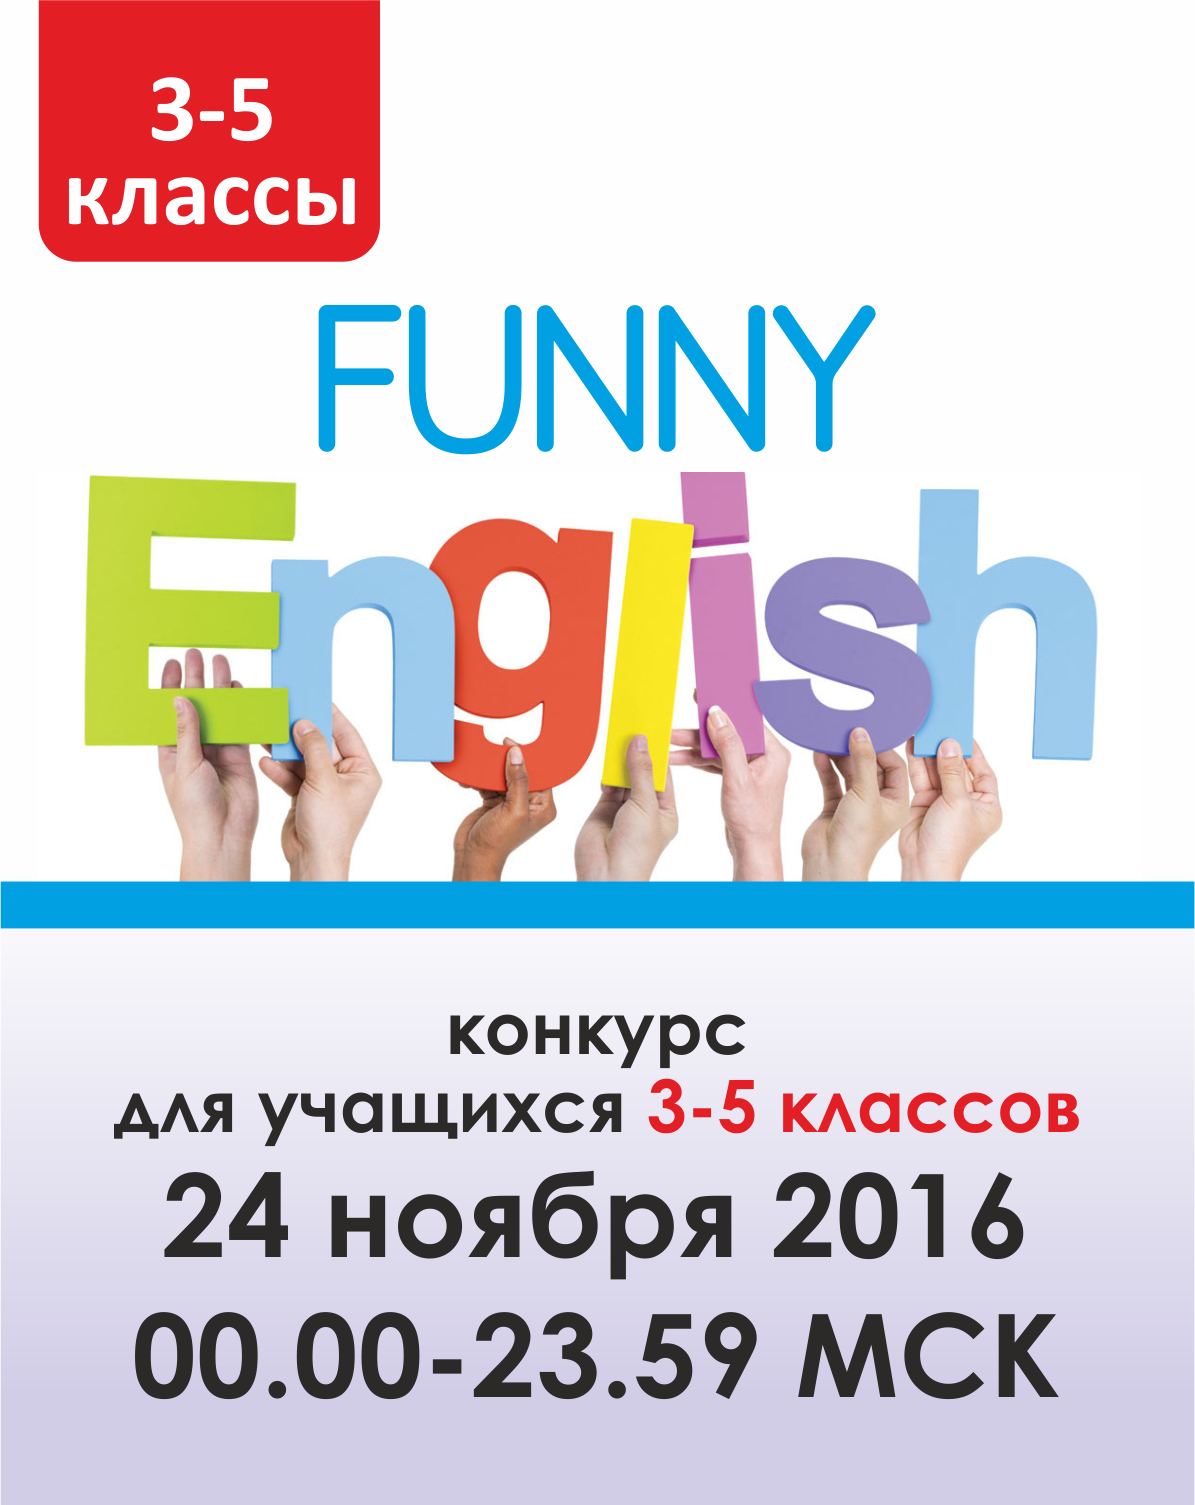 Funny English (3-5 классы)